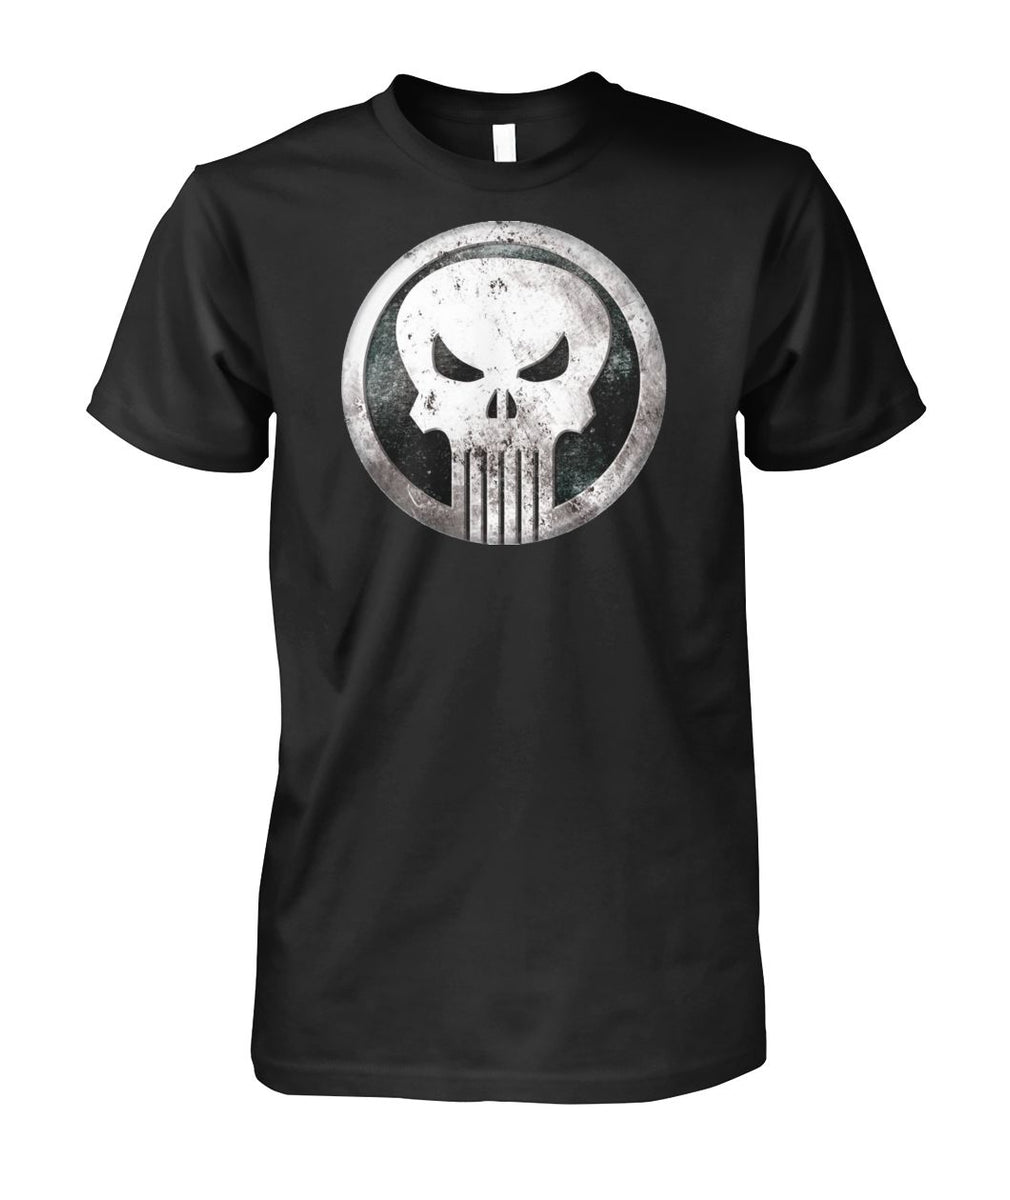 The Punisher Skull Shirt